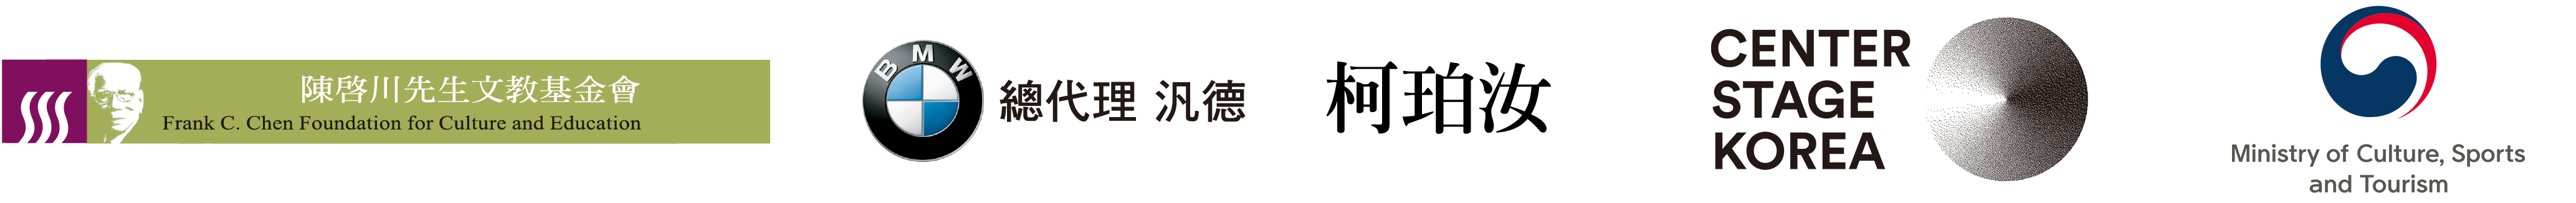 Logo:Frank C. Chen Foundation for Culture and Education、BMW、KE,PO-RU